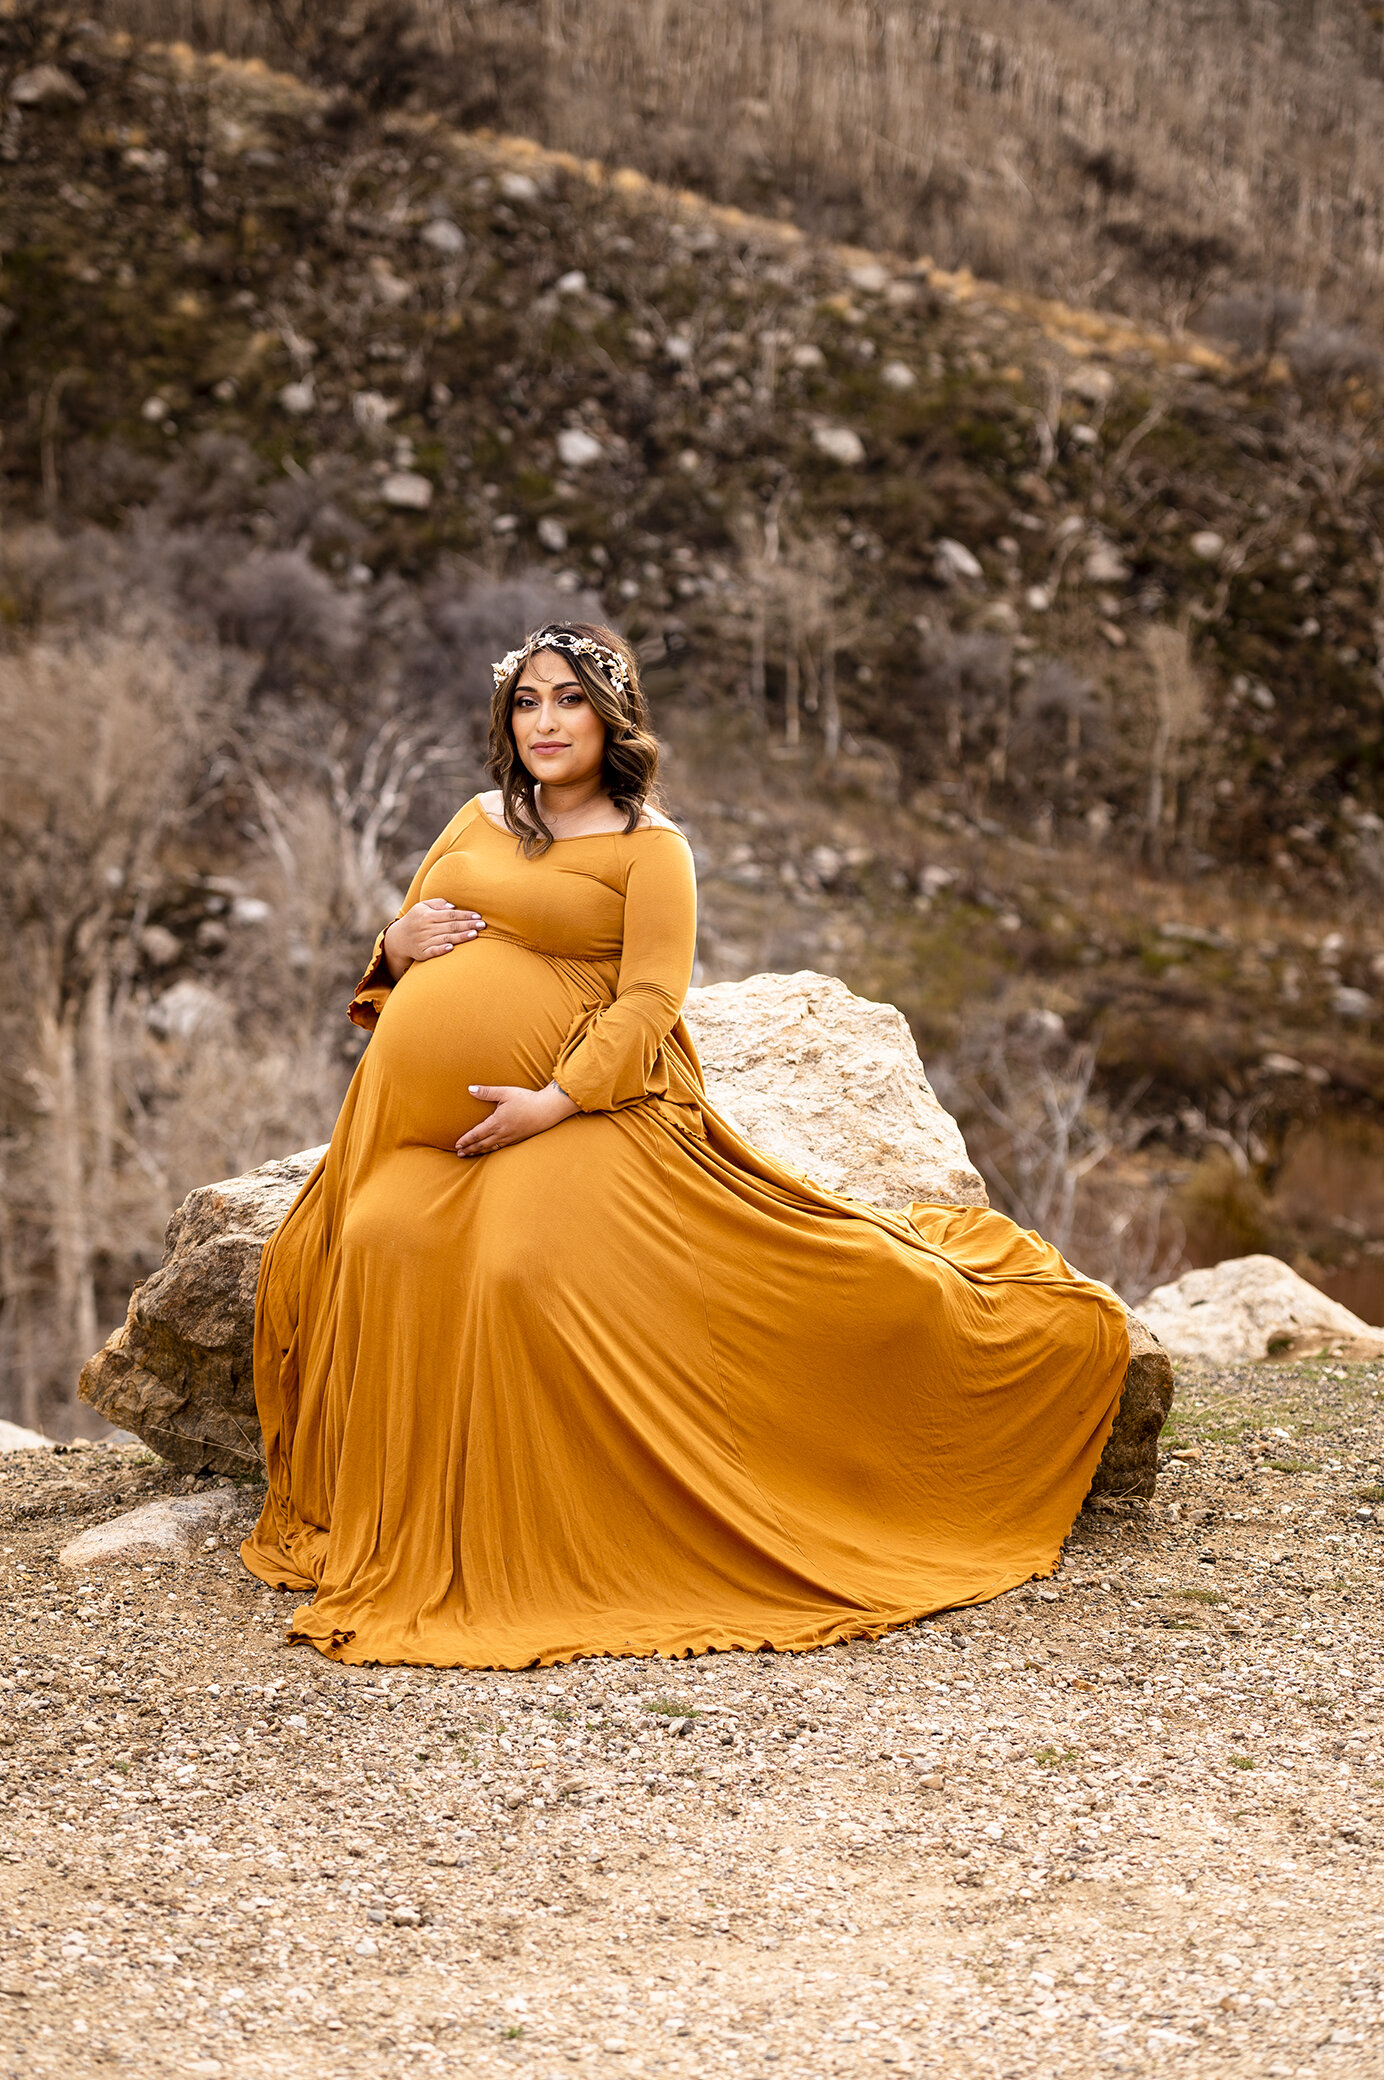 Lamoille Maternity Photographer, professional maternity photos, pregnancy photography Lamoille, best maternity photos